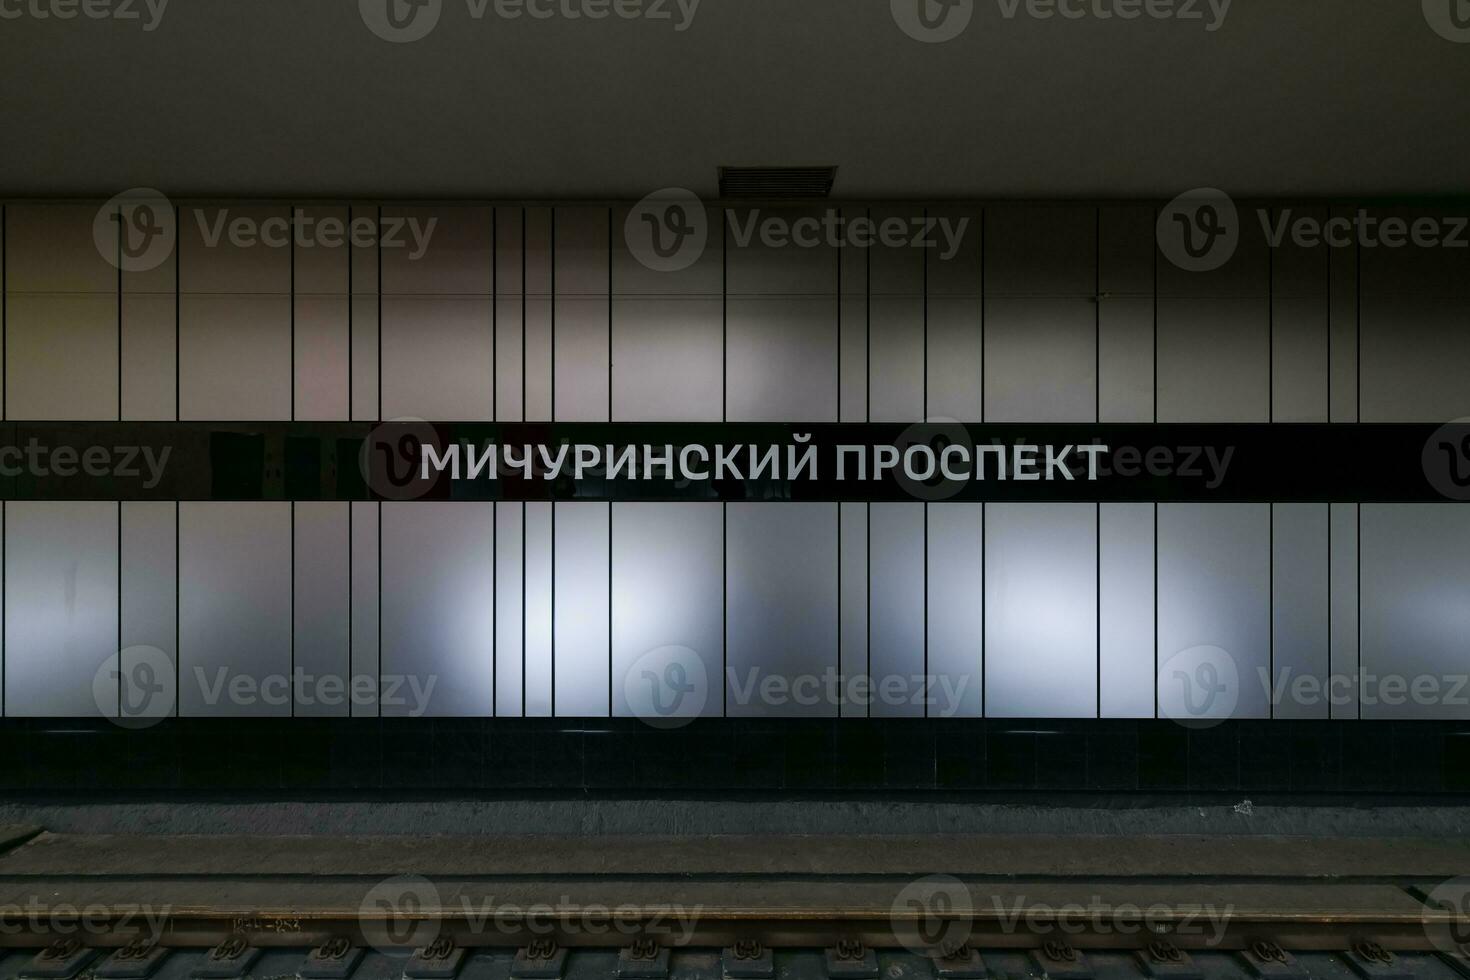 Michurinsky Prospekt Metro Station - Moscow, Russia photo